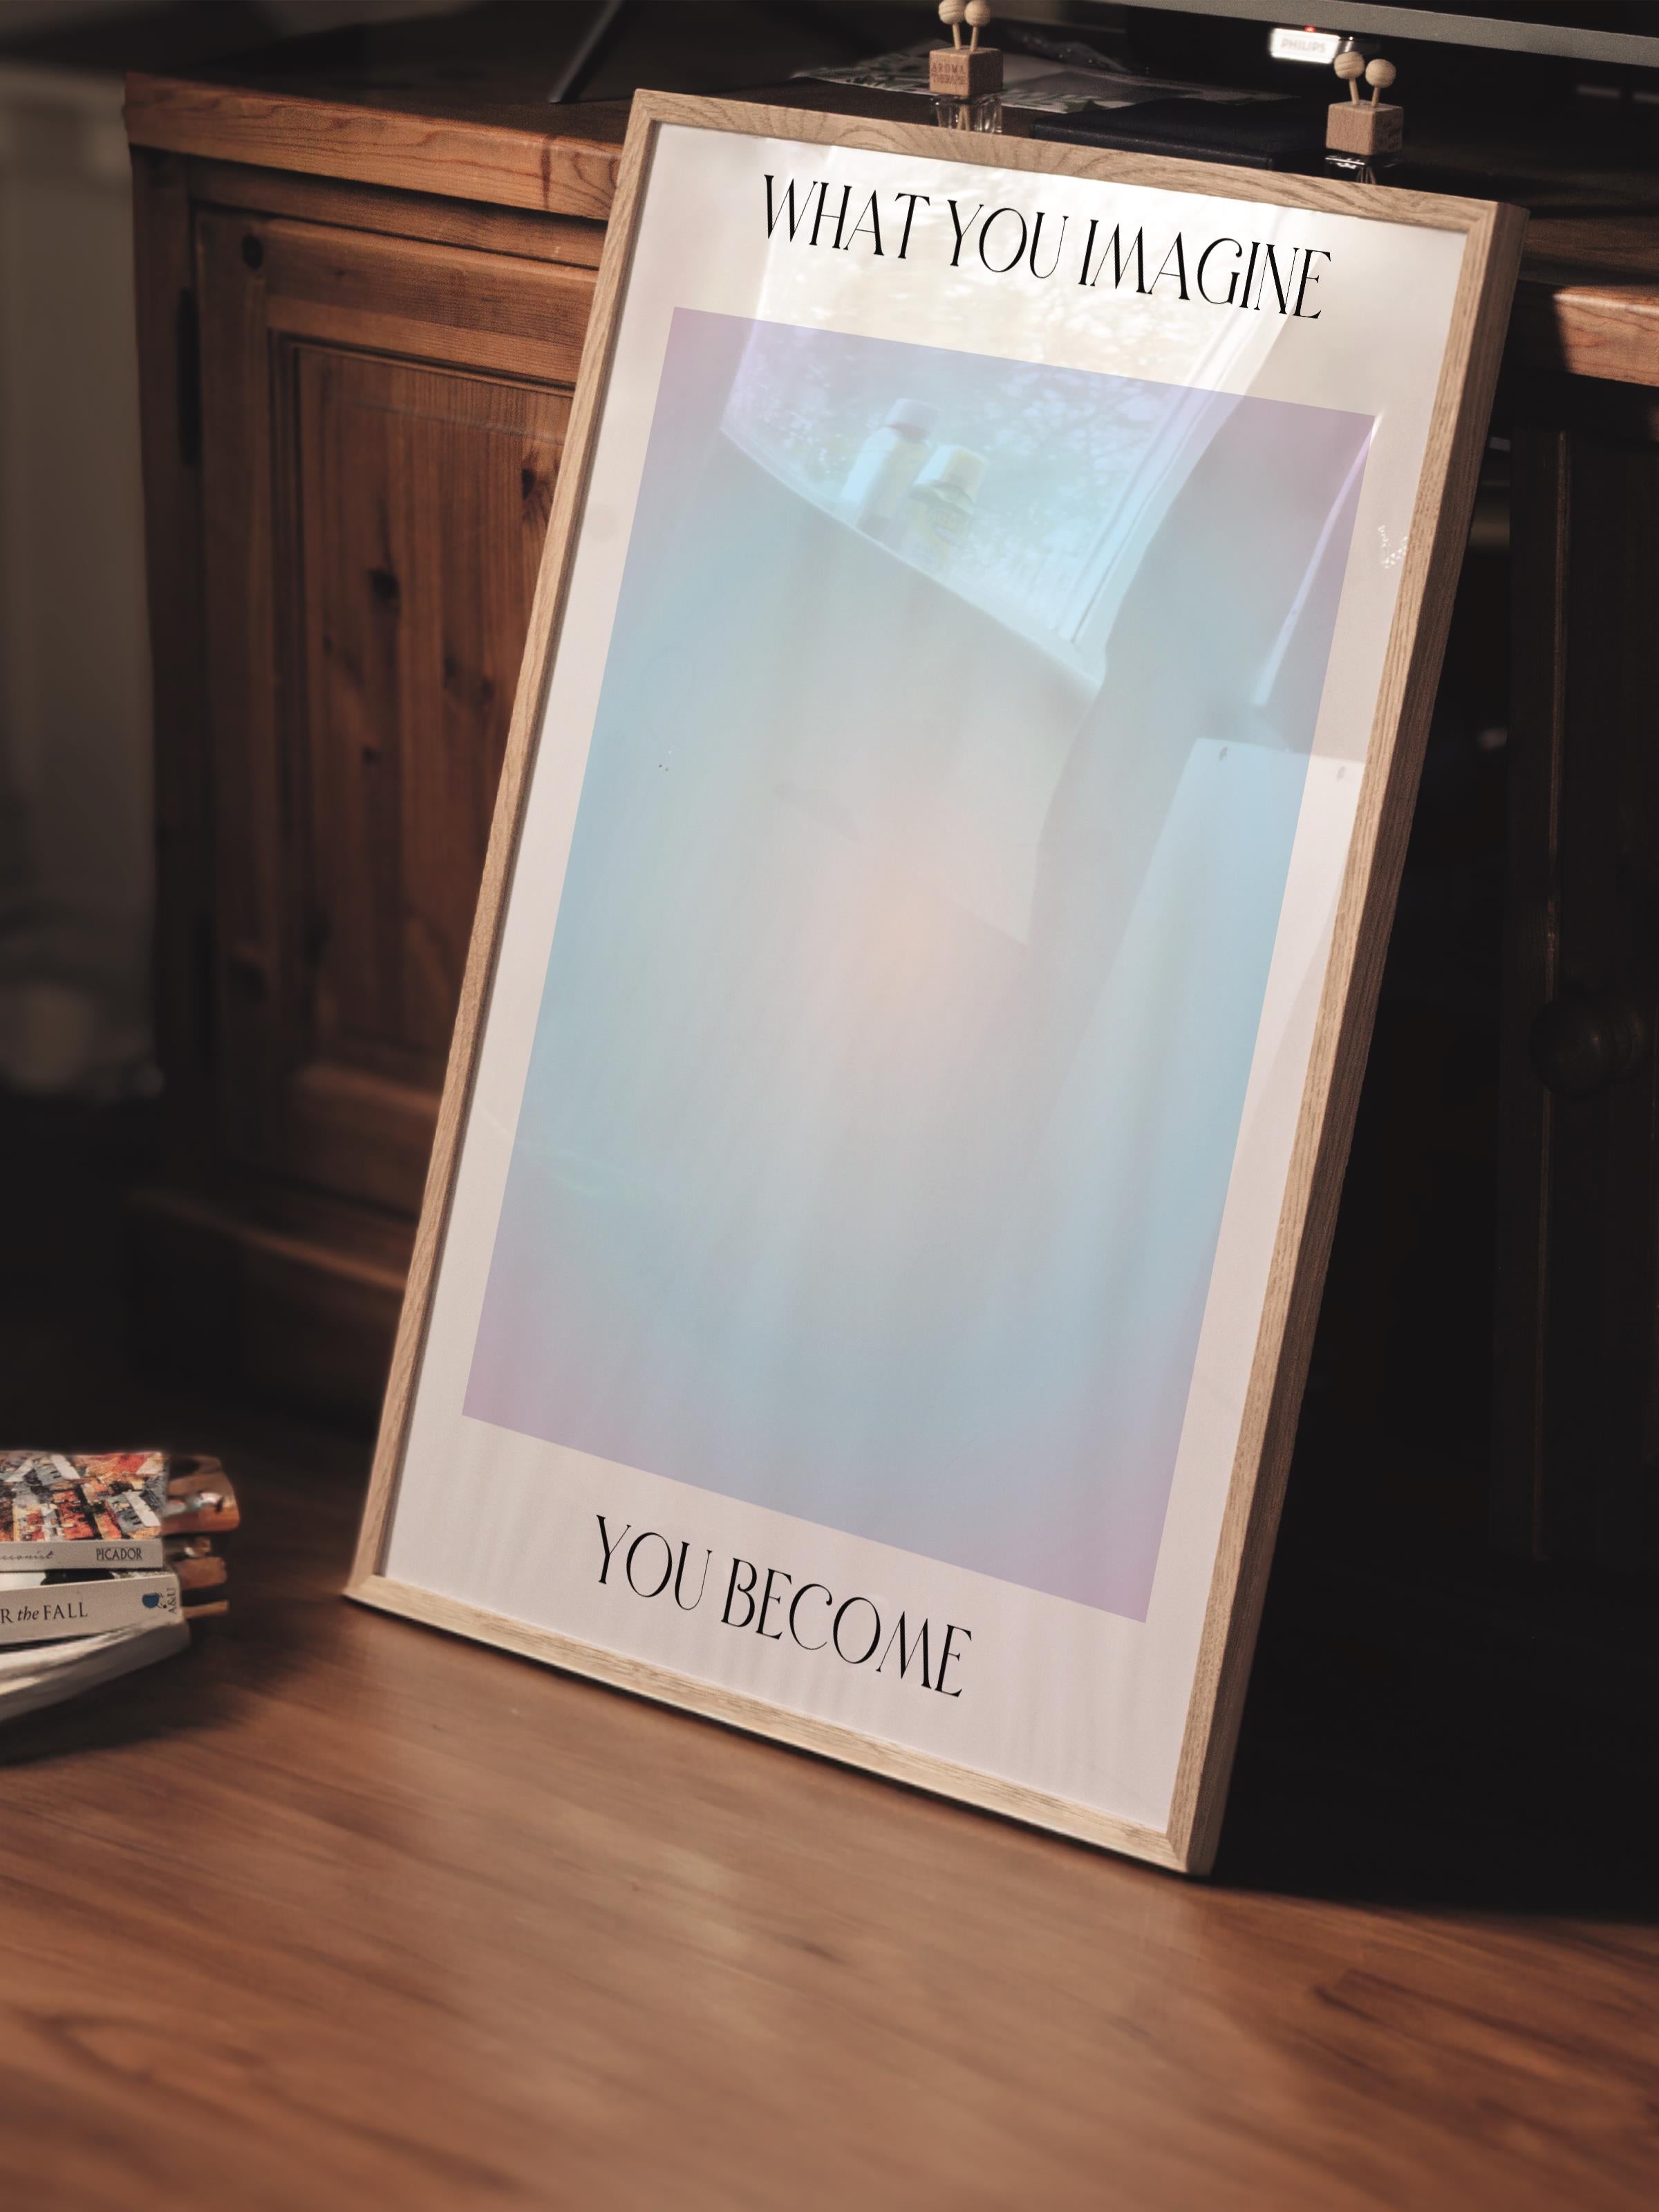 Çerçevesiz Poster, Aura Serisi NO:95 - What You Imagine, You Become, Melek Numaraları, Renkli Poster